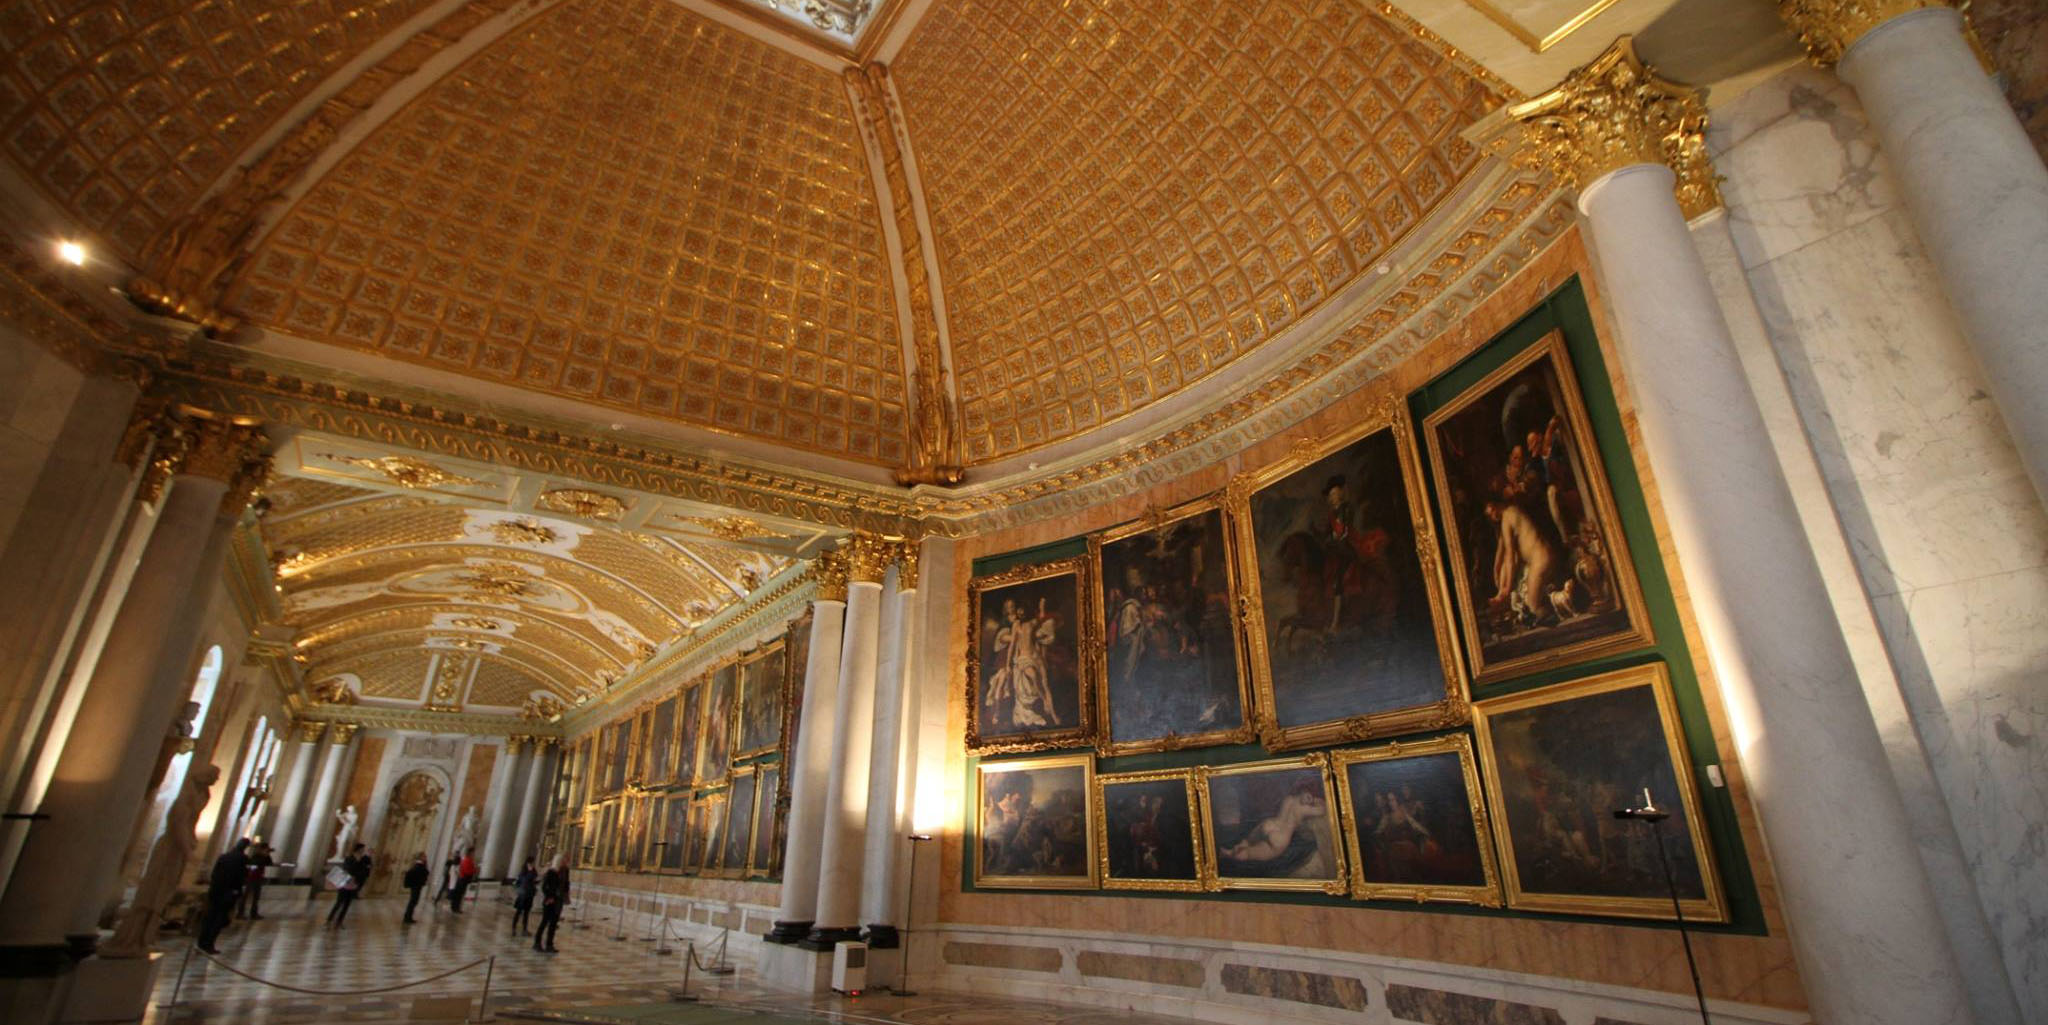 Photo of the elaborately molded, golden palace ceiling